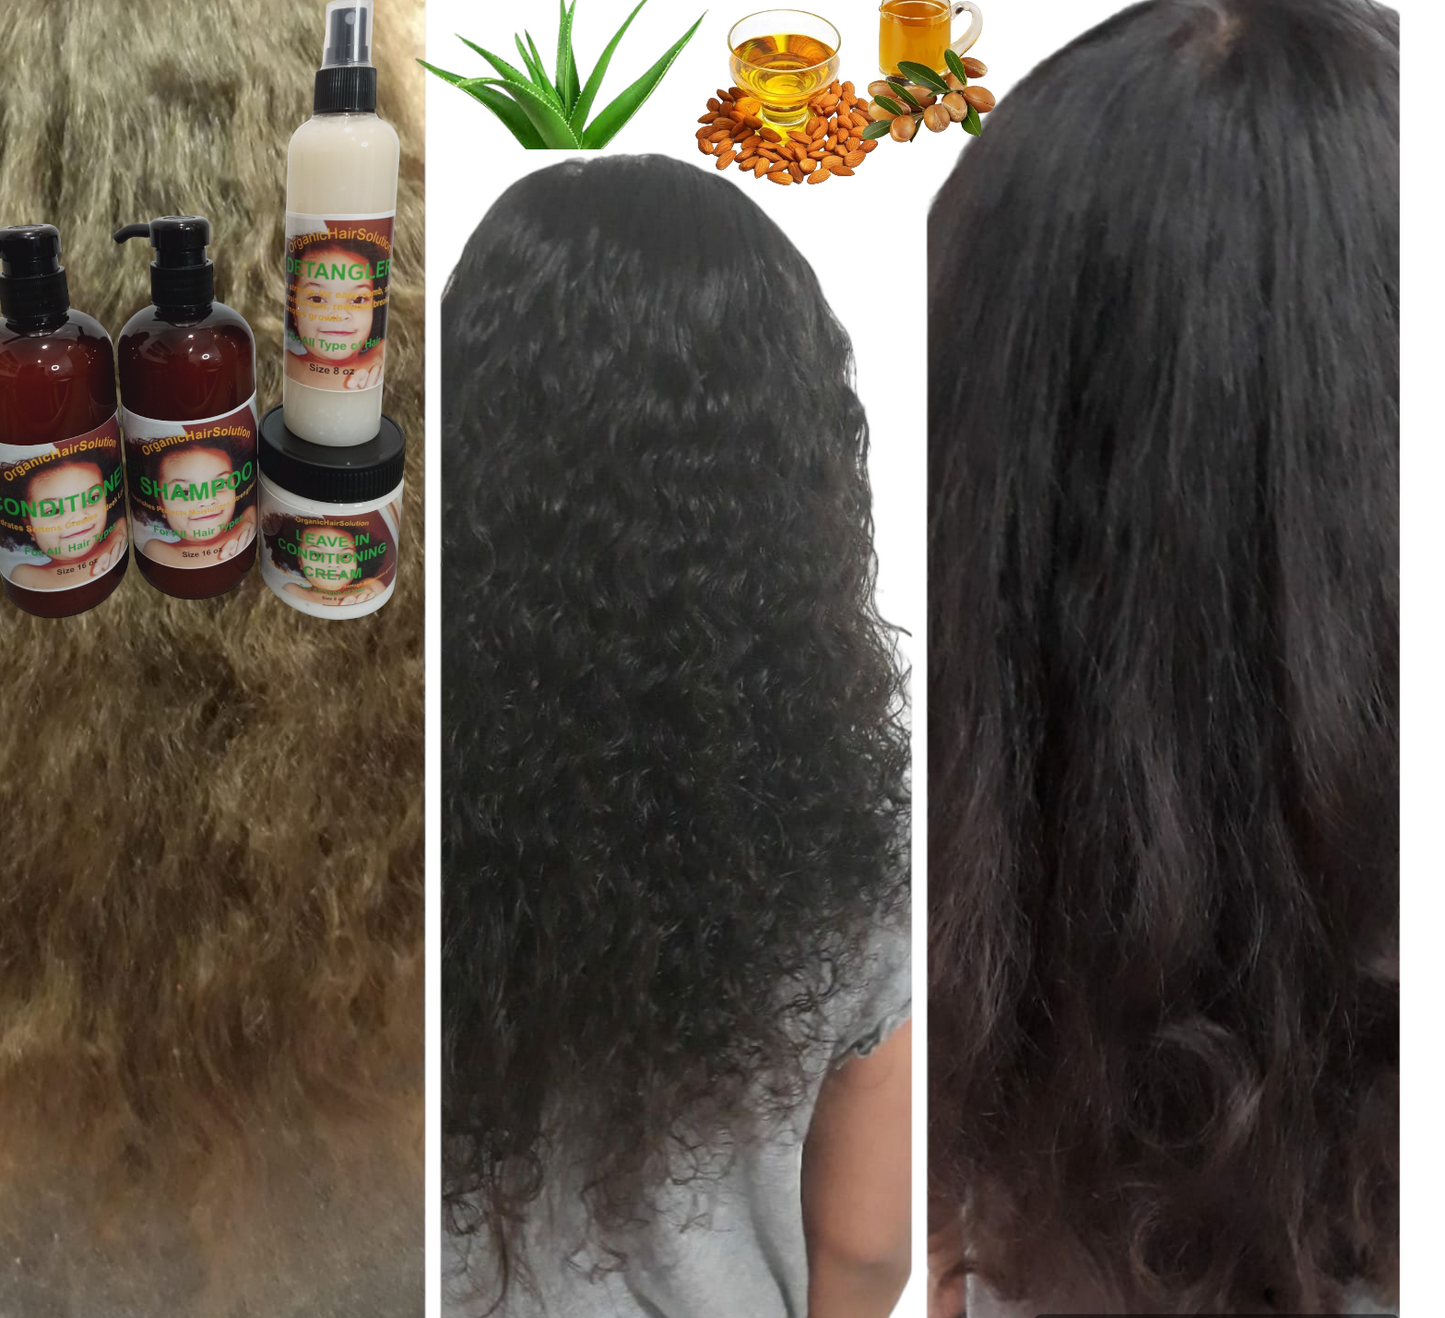 KIDS  LEAVE-IN CONDITIONER CREAM- With Aloe vera, Castor Oil, Tea tree, Vitamin E, Willow bark - Organic Hair Solution, LLC